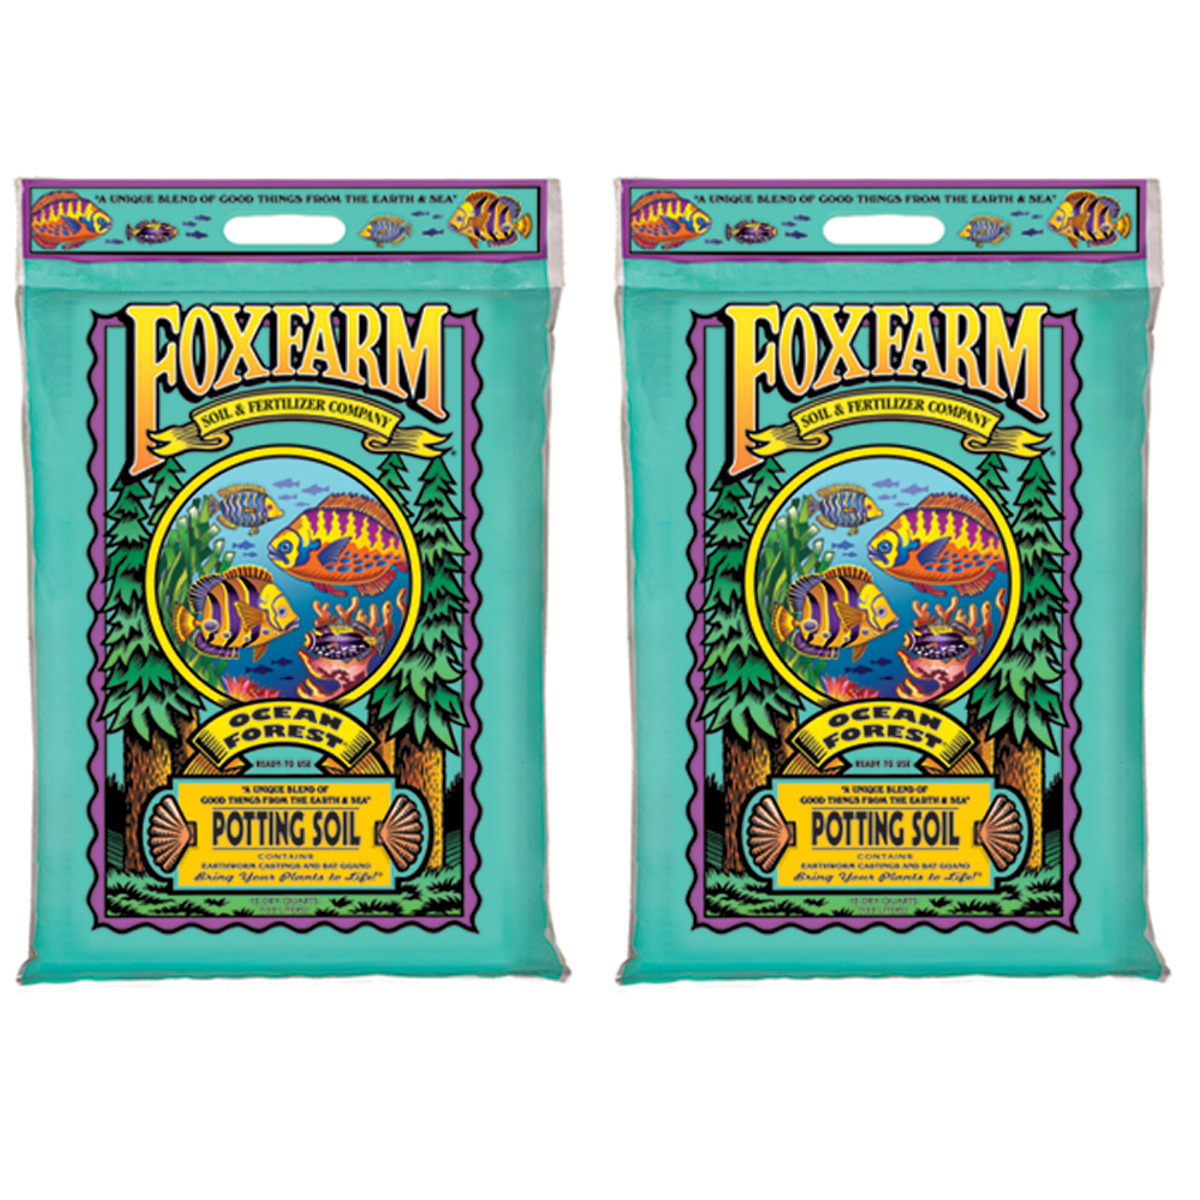 Foxfarm FX14053 Ocean Forest Organic Garden Potting Soil Mix 12 Quarts (2 Pack)